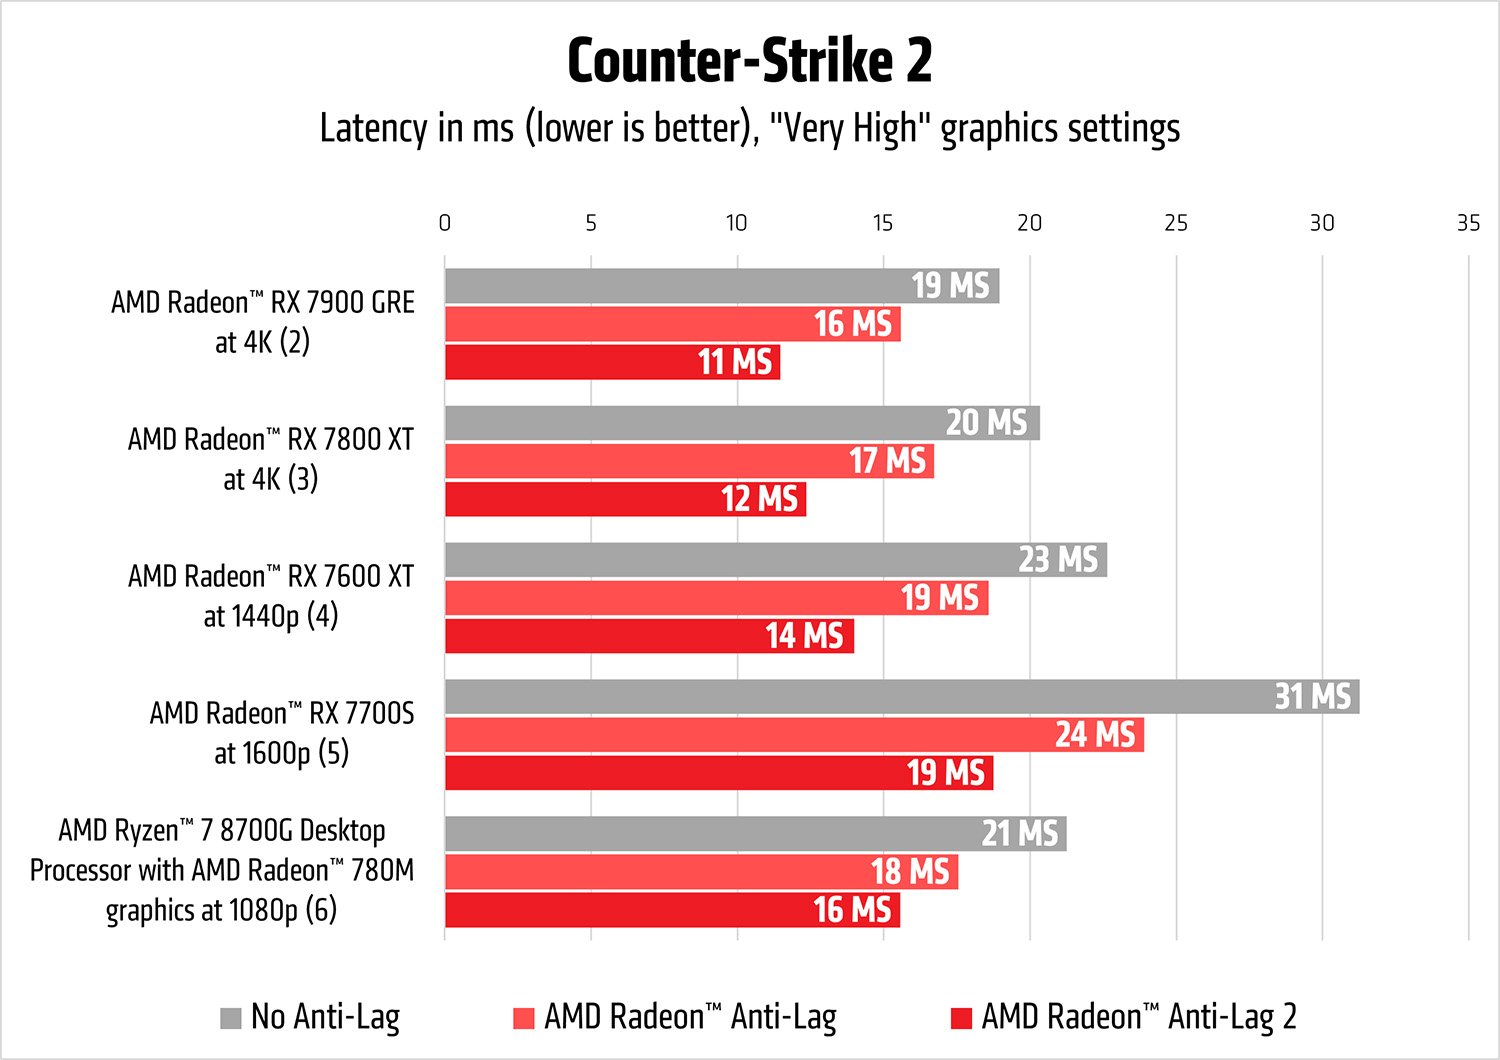 AMD-Radeon-Anti-Lag2-Counter-Strike2-latency-chart.jpg